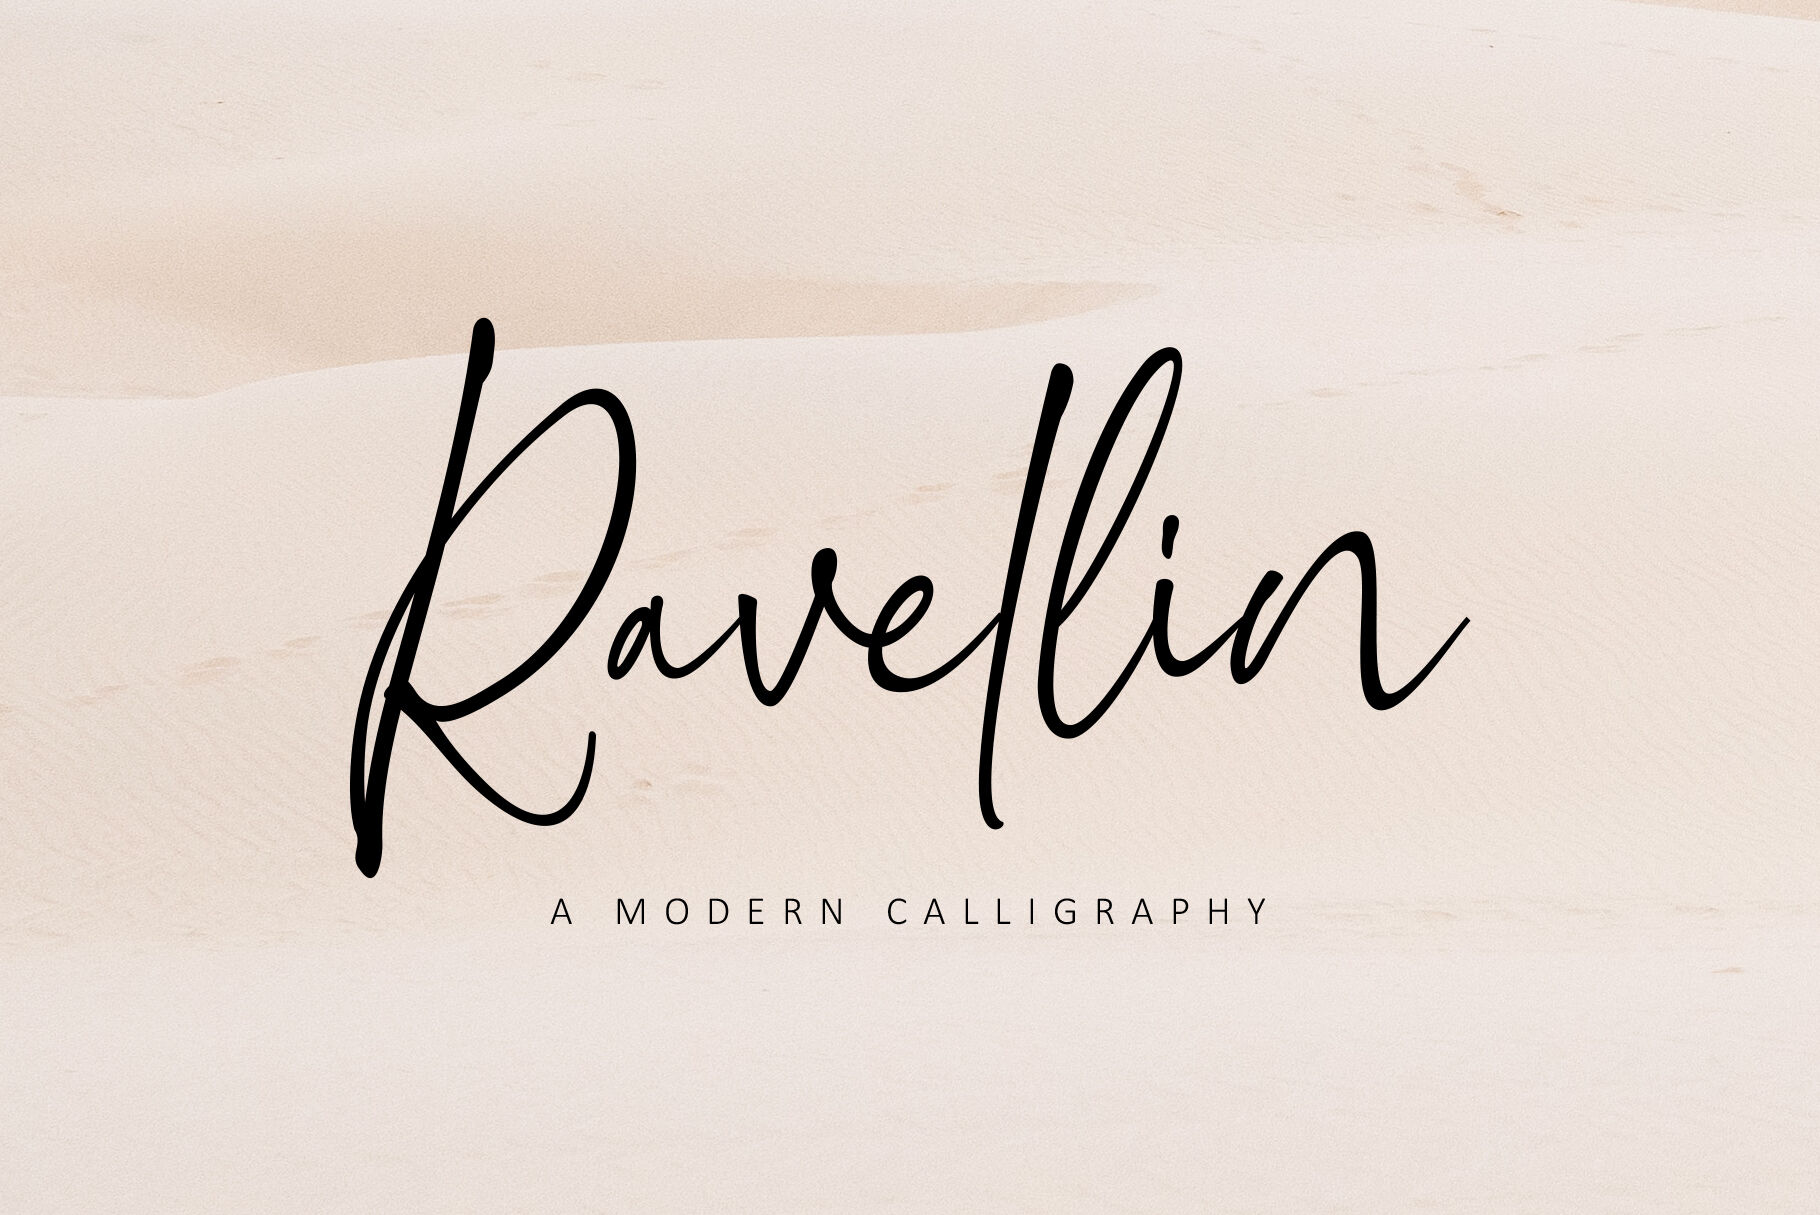 Ravellin A Modern Calligraphy By Nyalaapi Thehungryjpeg Com